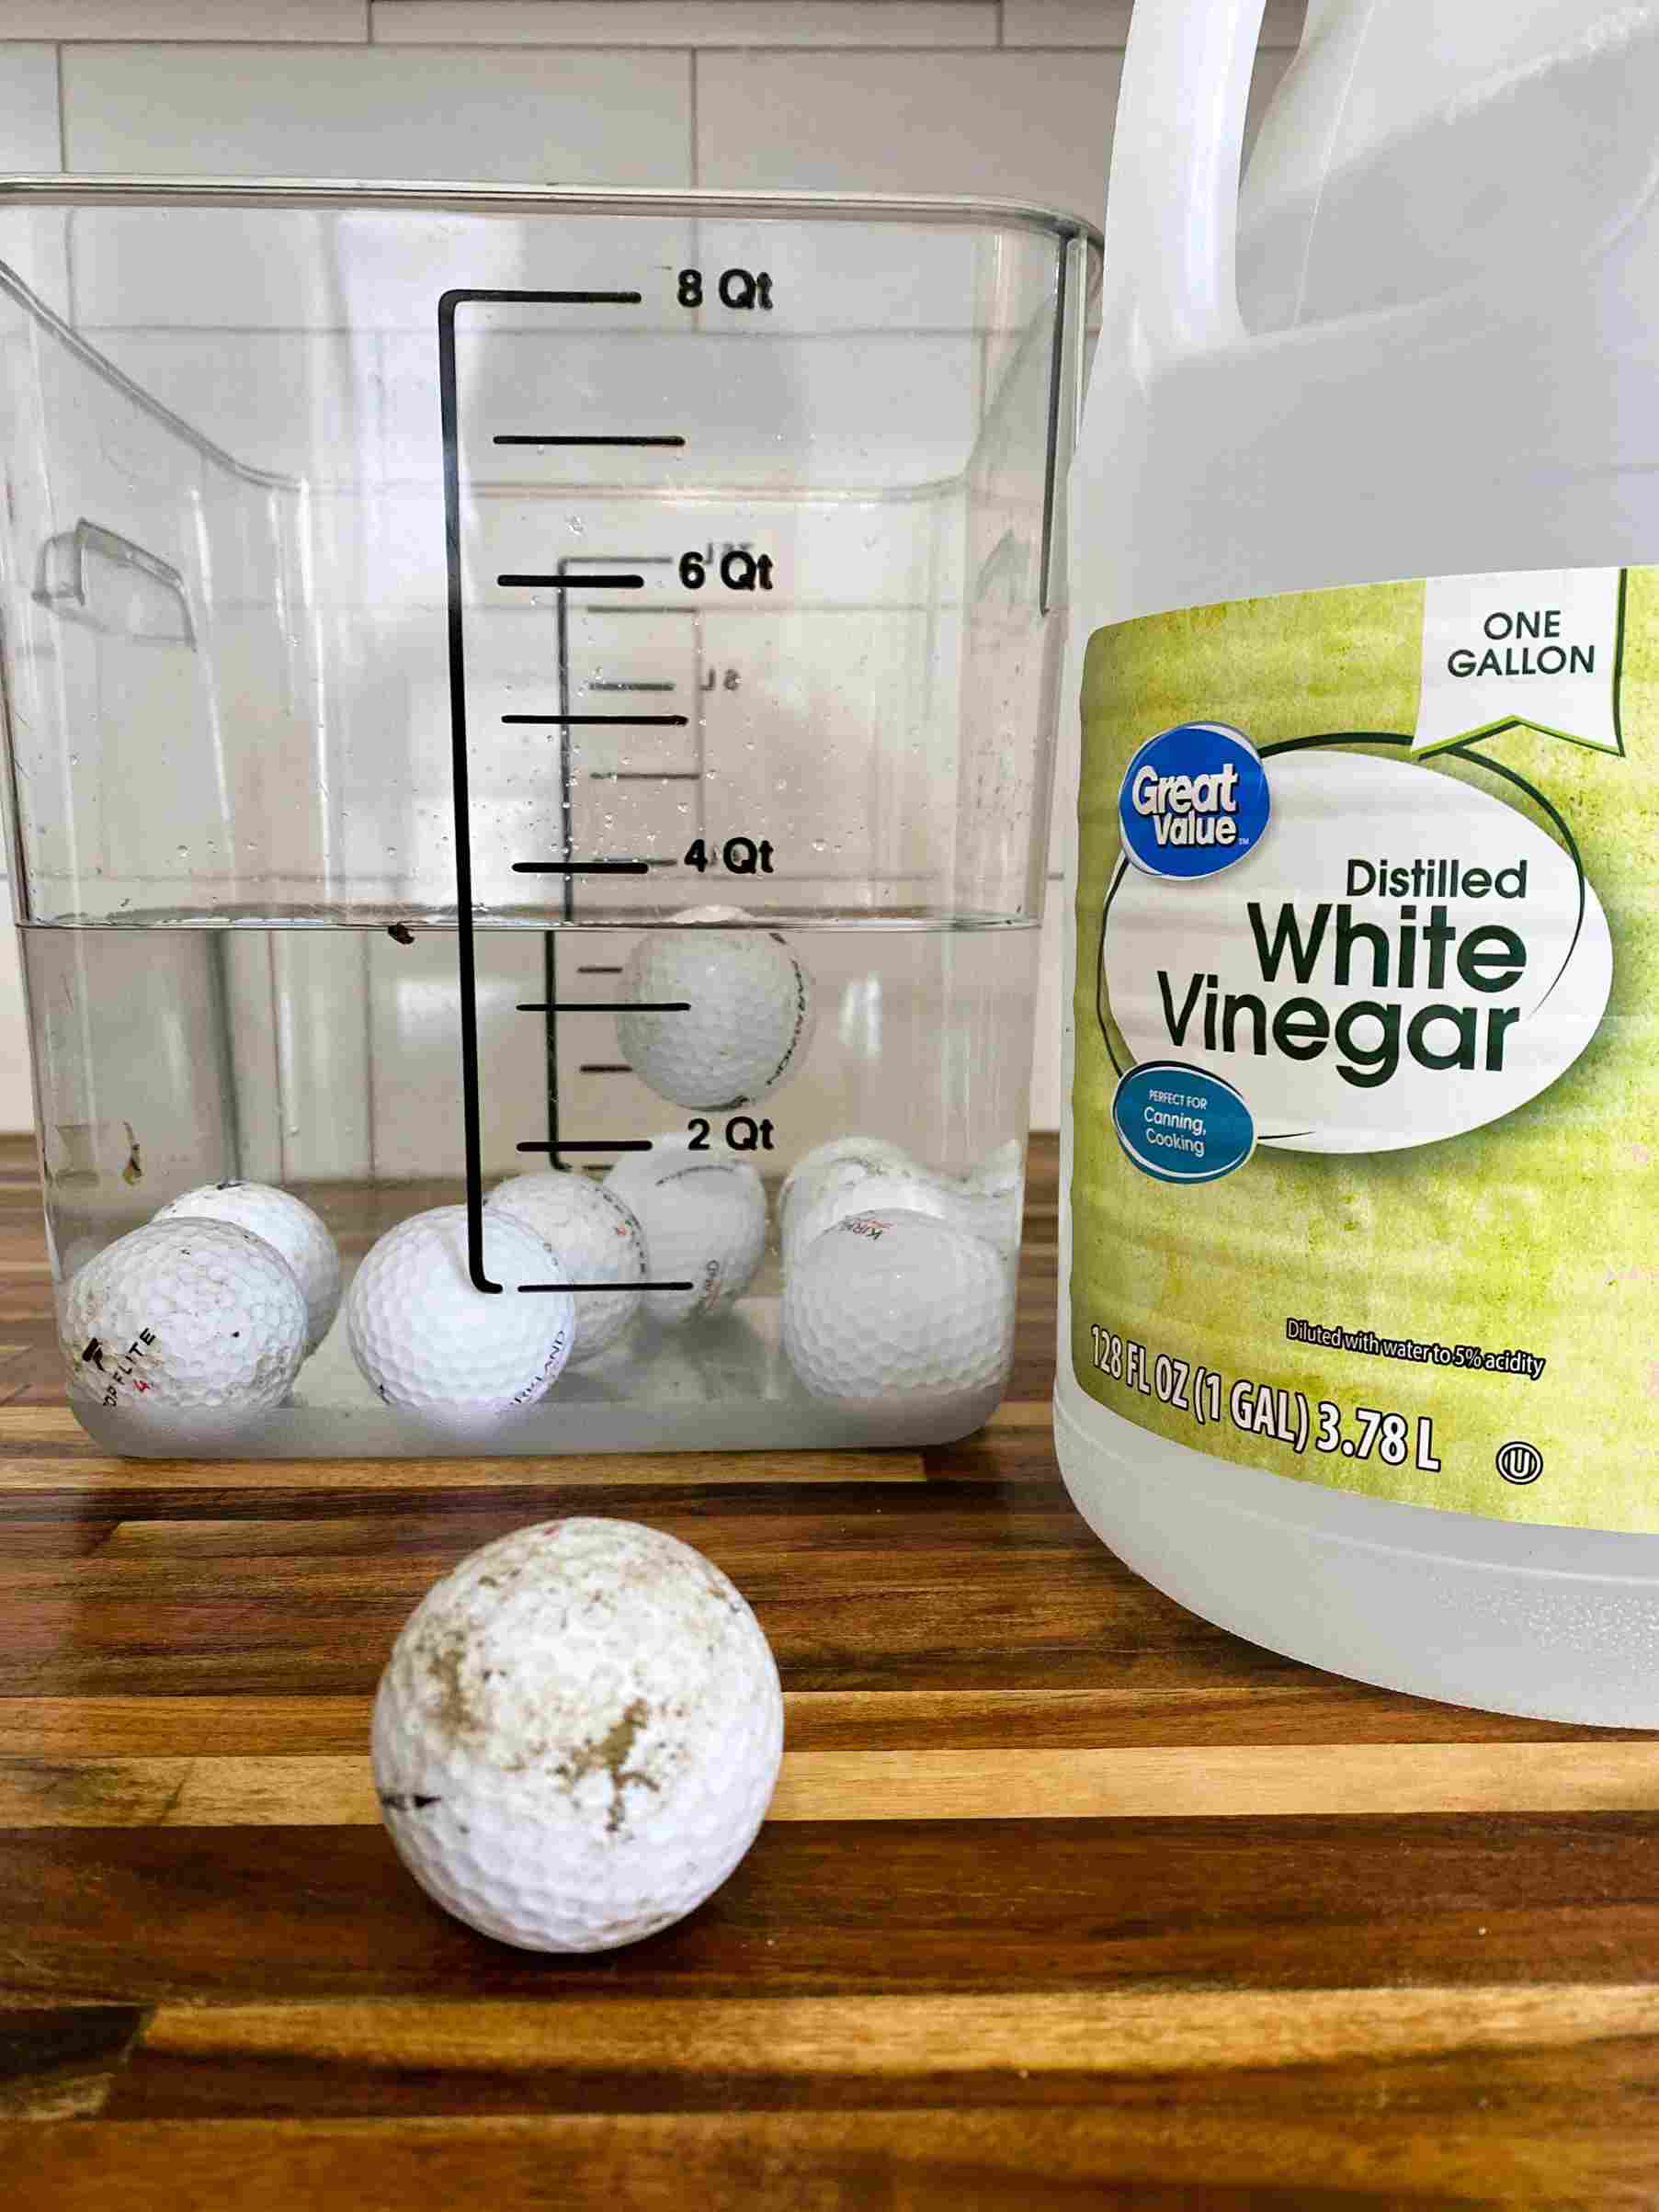 Clean Golf Balls With Vinegar